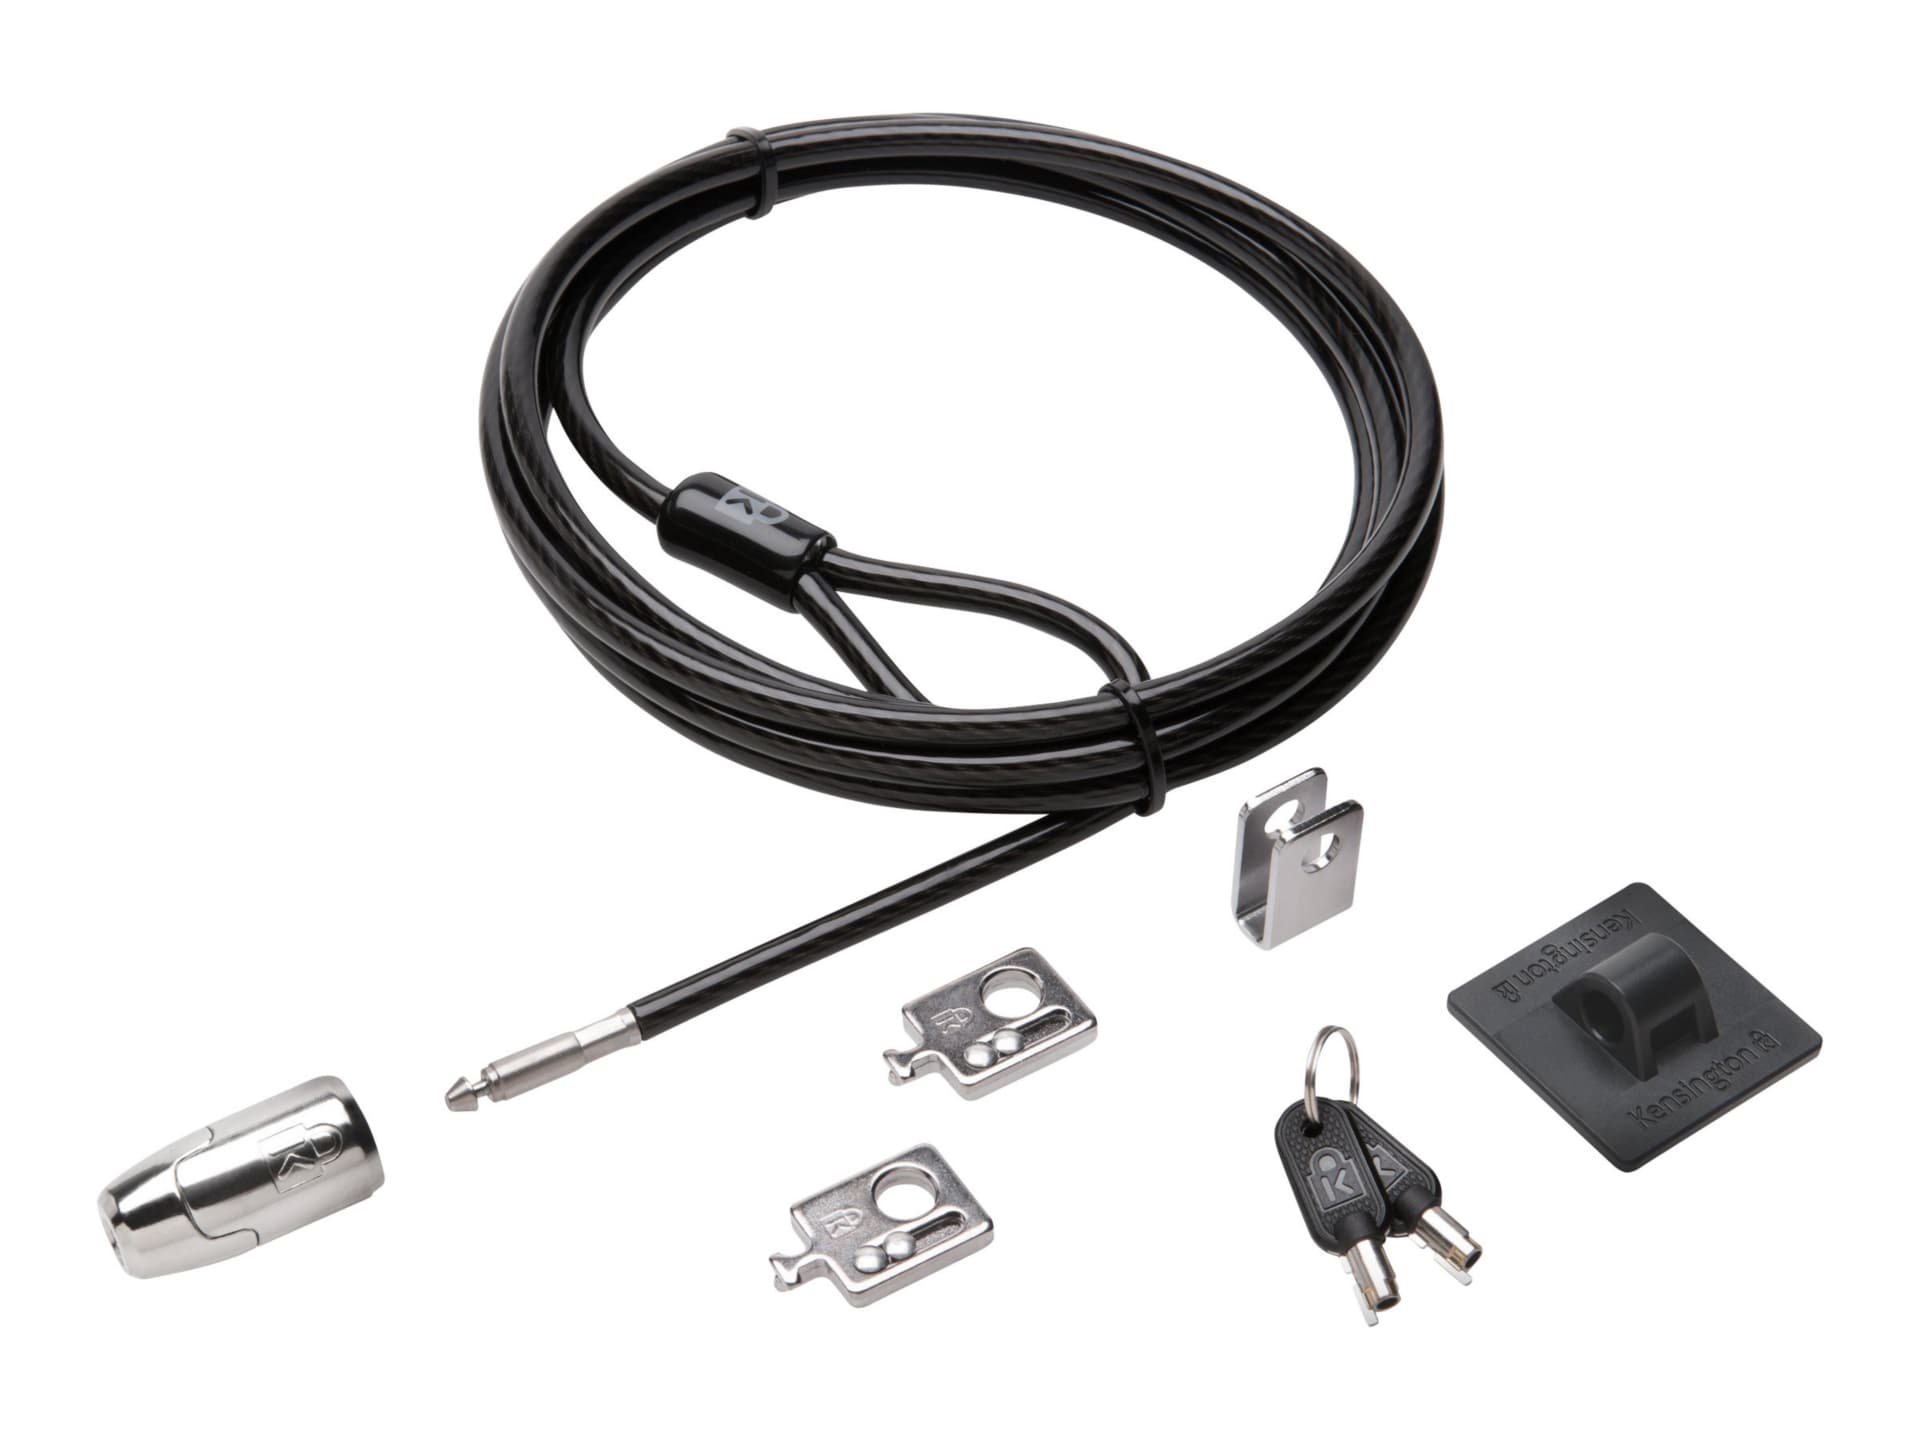 Kensington Desktop and Peripherals Standard Keyed Locking Kit 2.0 - security cable lock